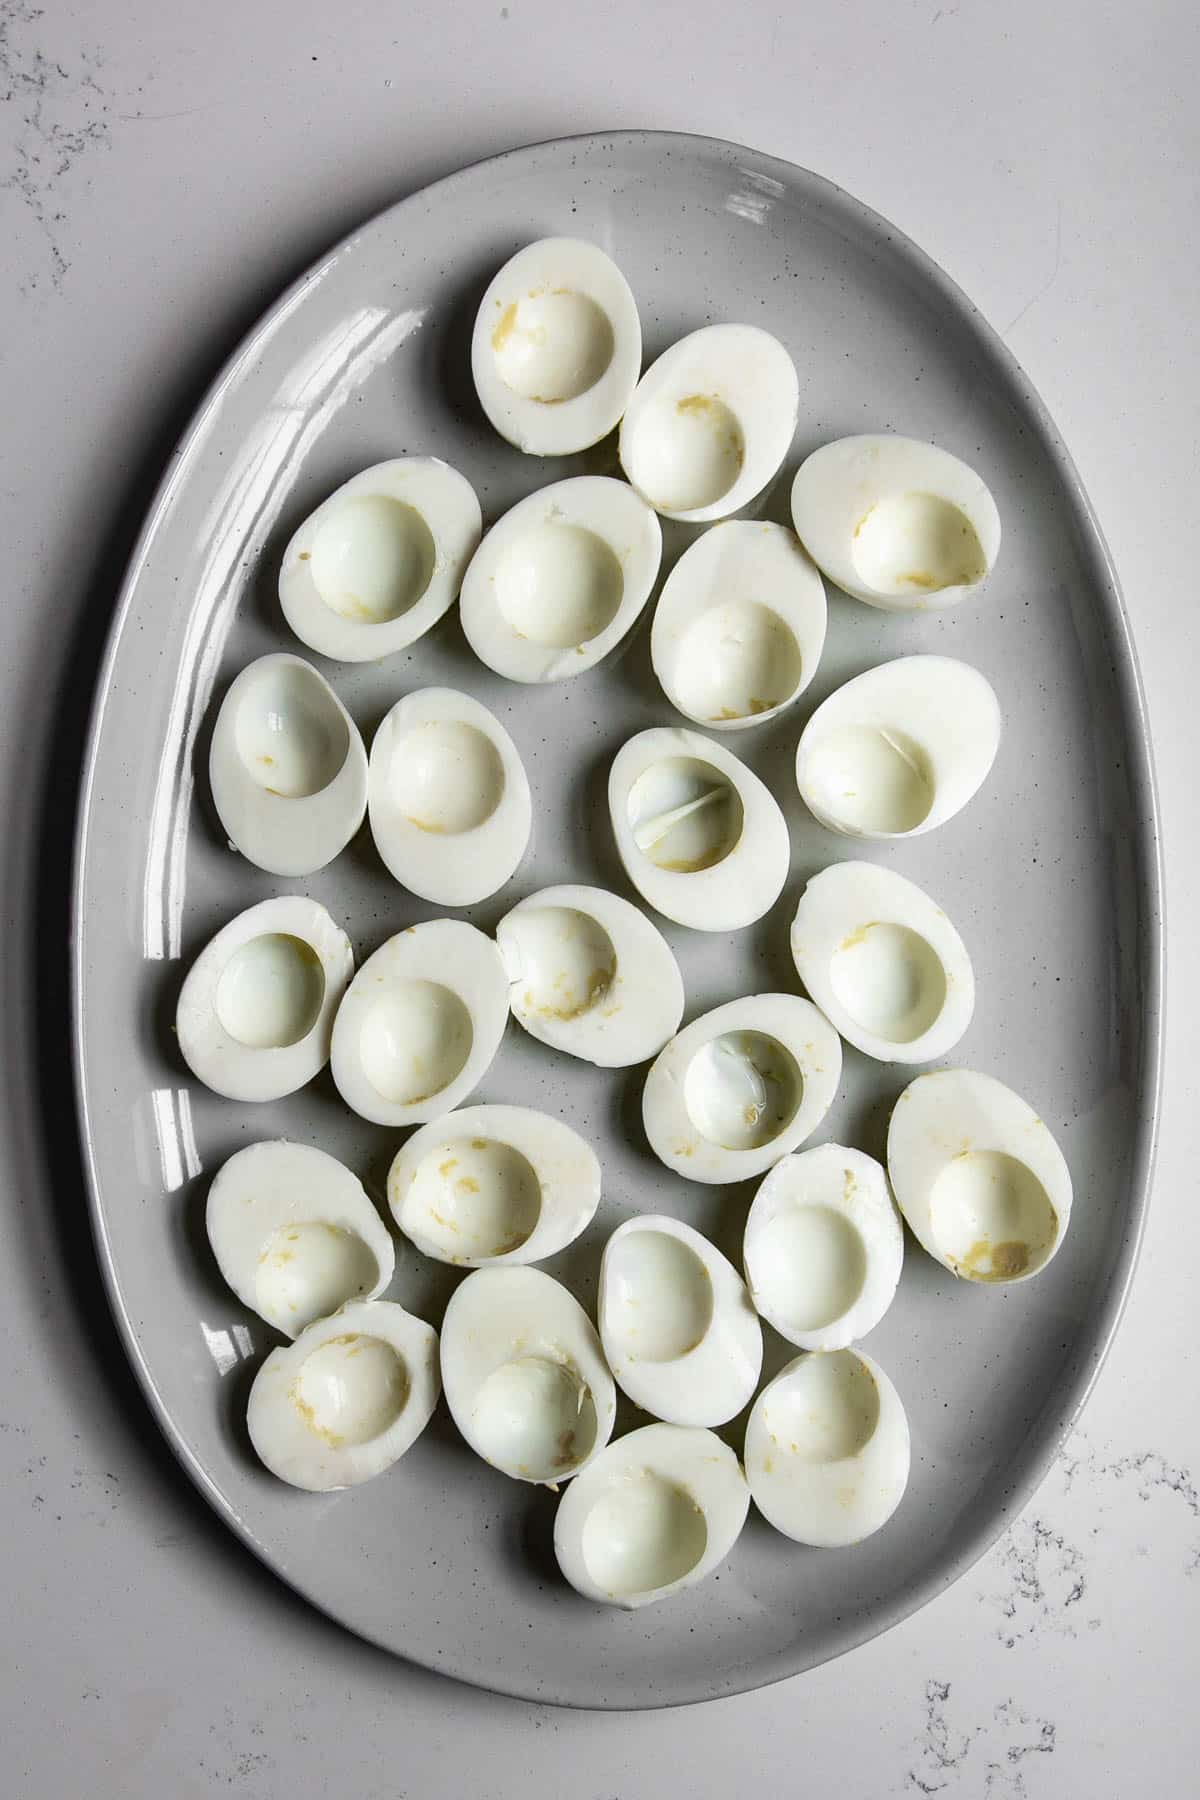 emptied hard boiled egg whites on a large platter.